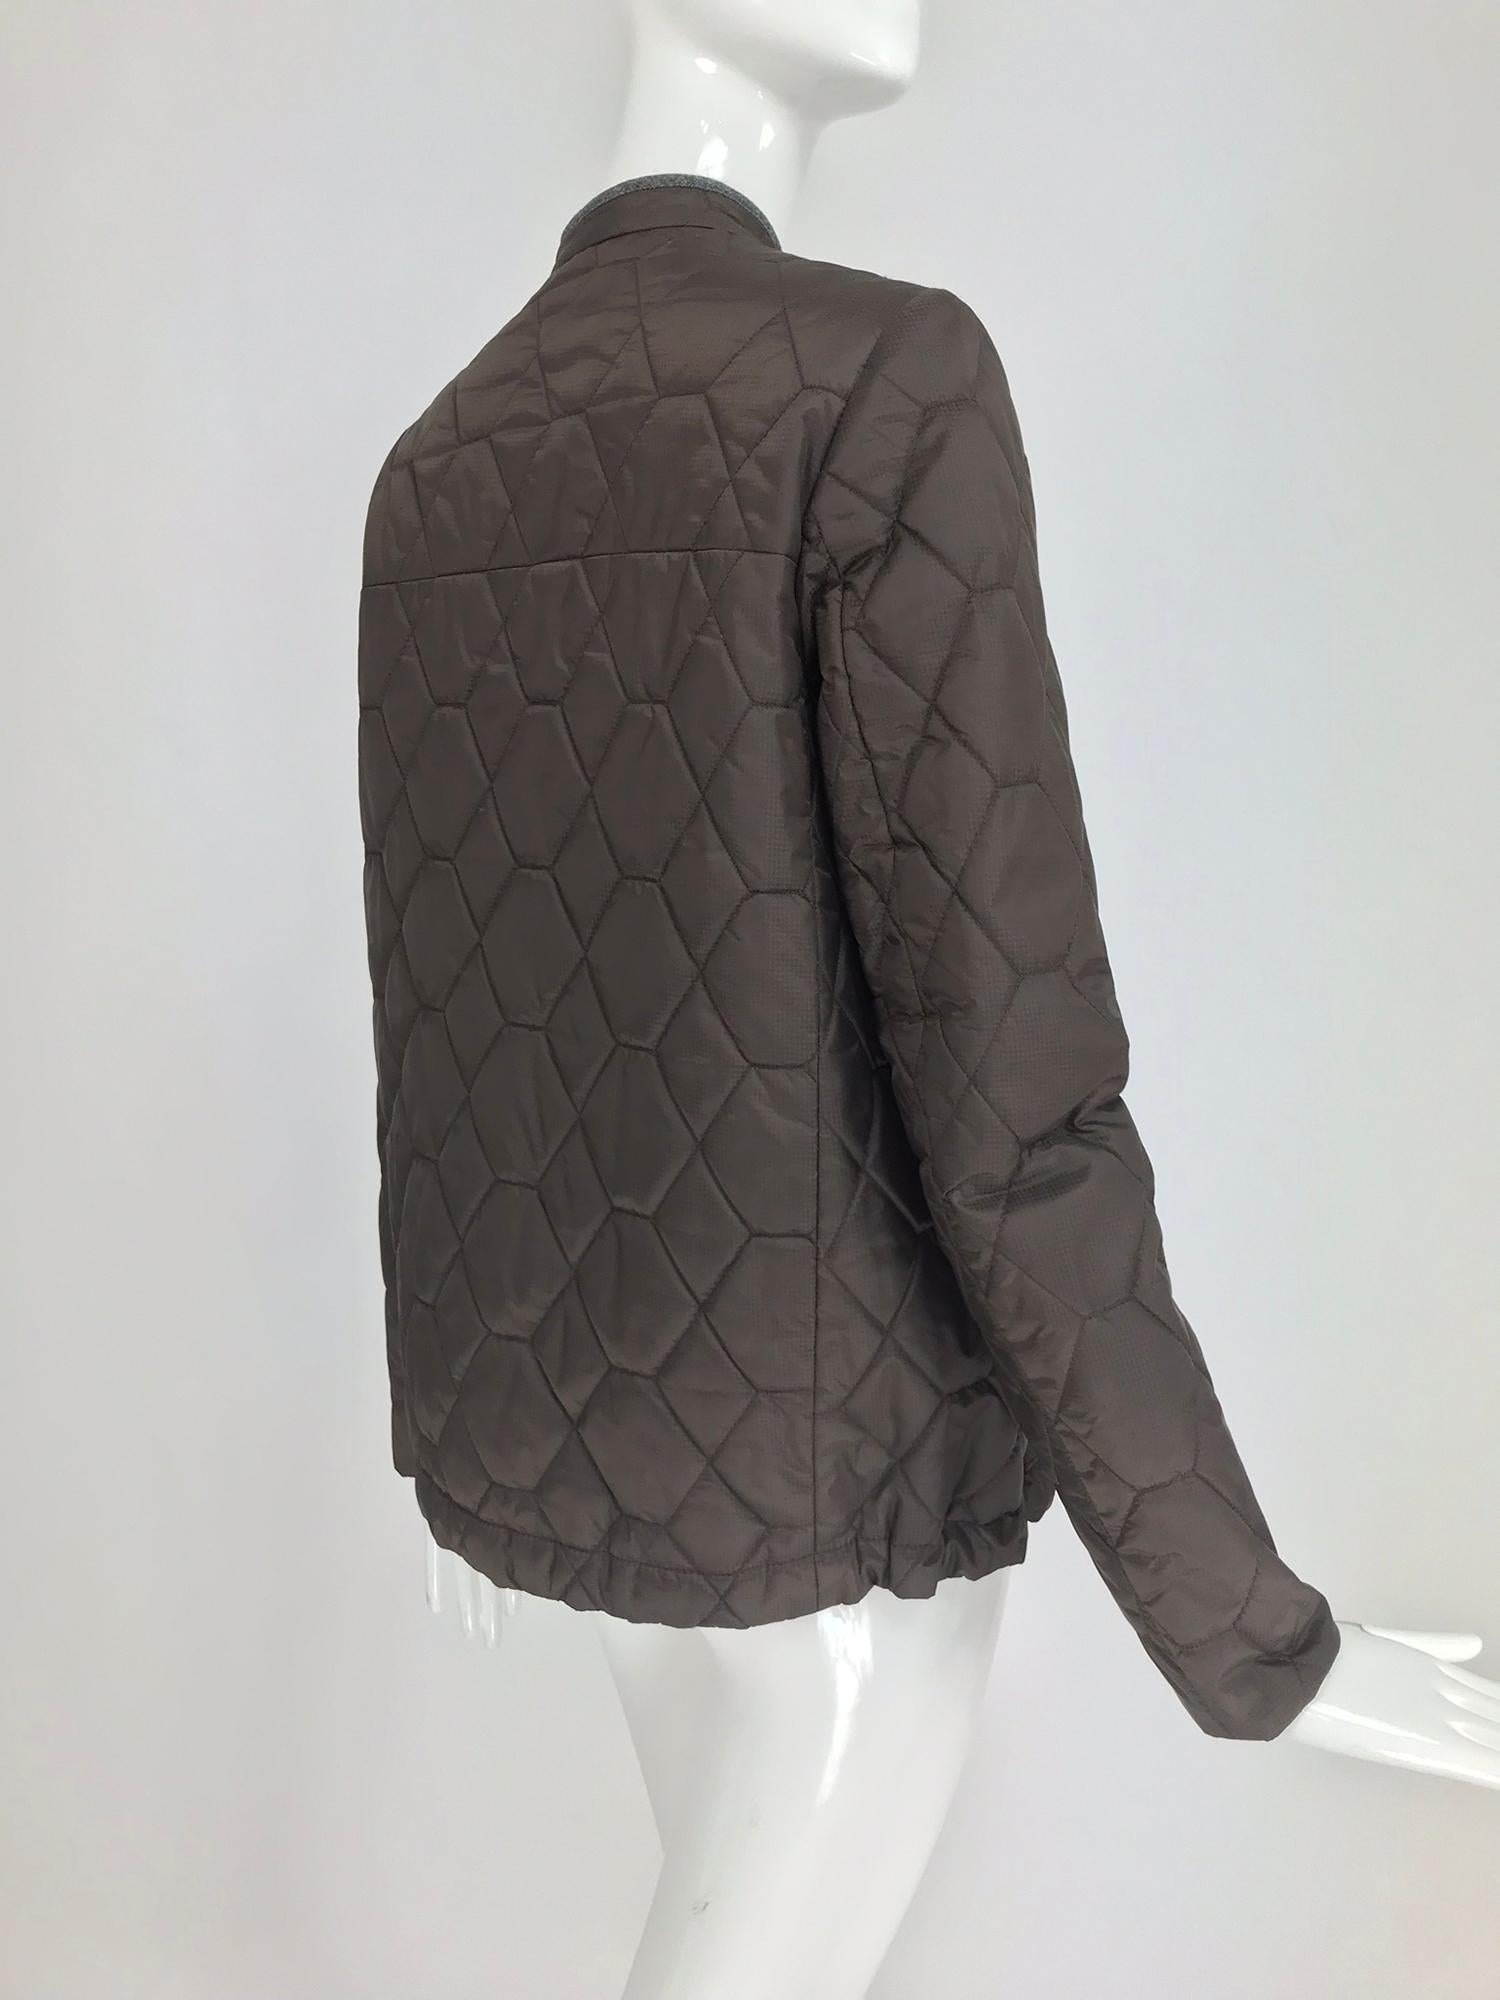 Brunello Cucinelli Chocolate Brown geometric pattern Quilted Sport Jacket 42 4